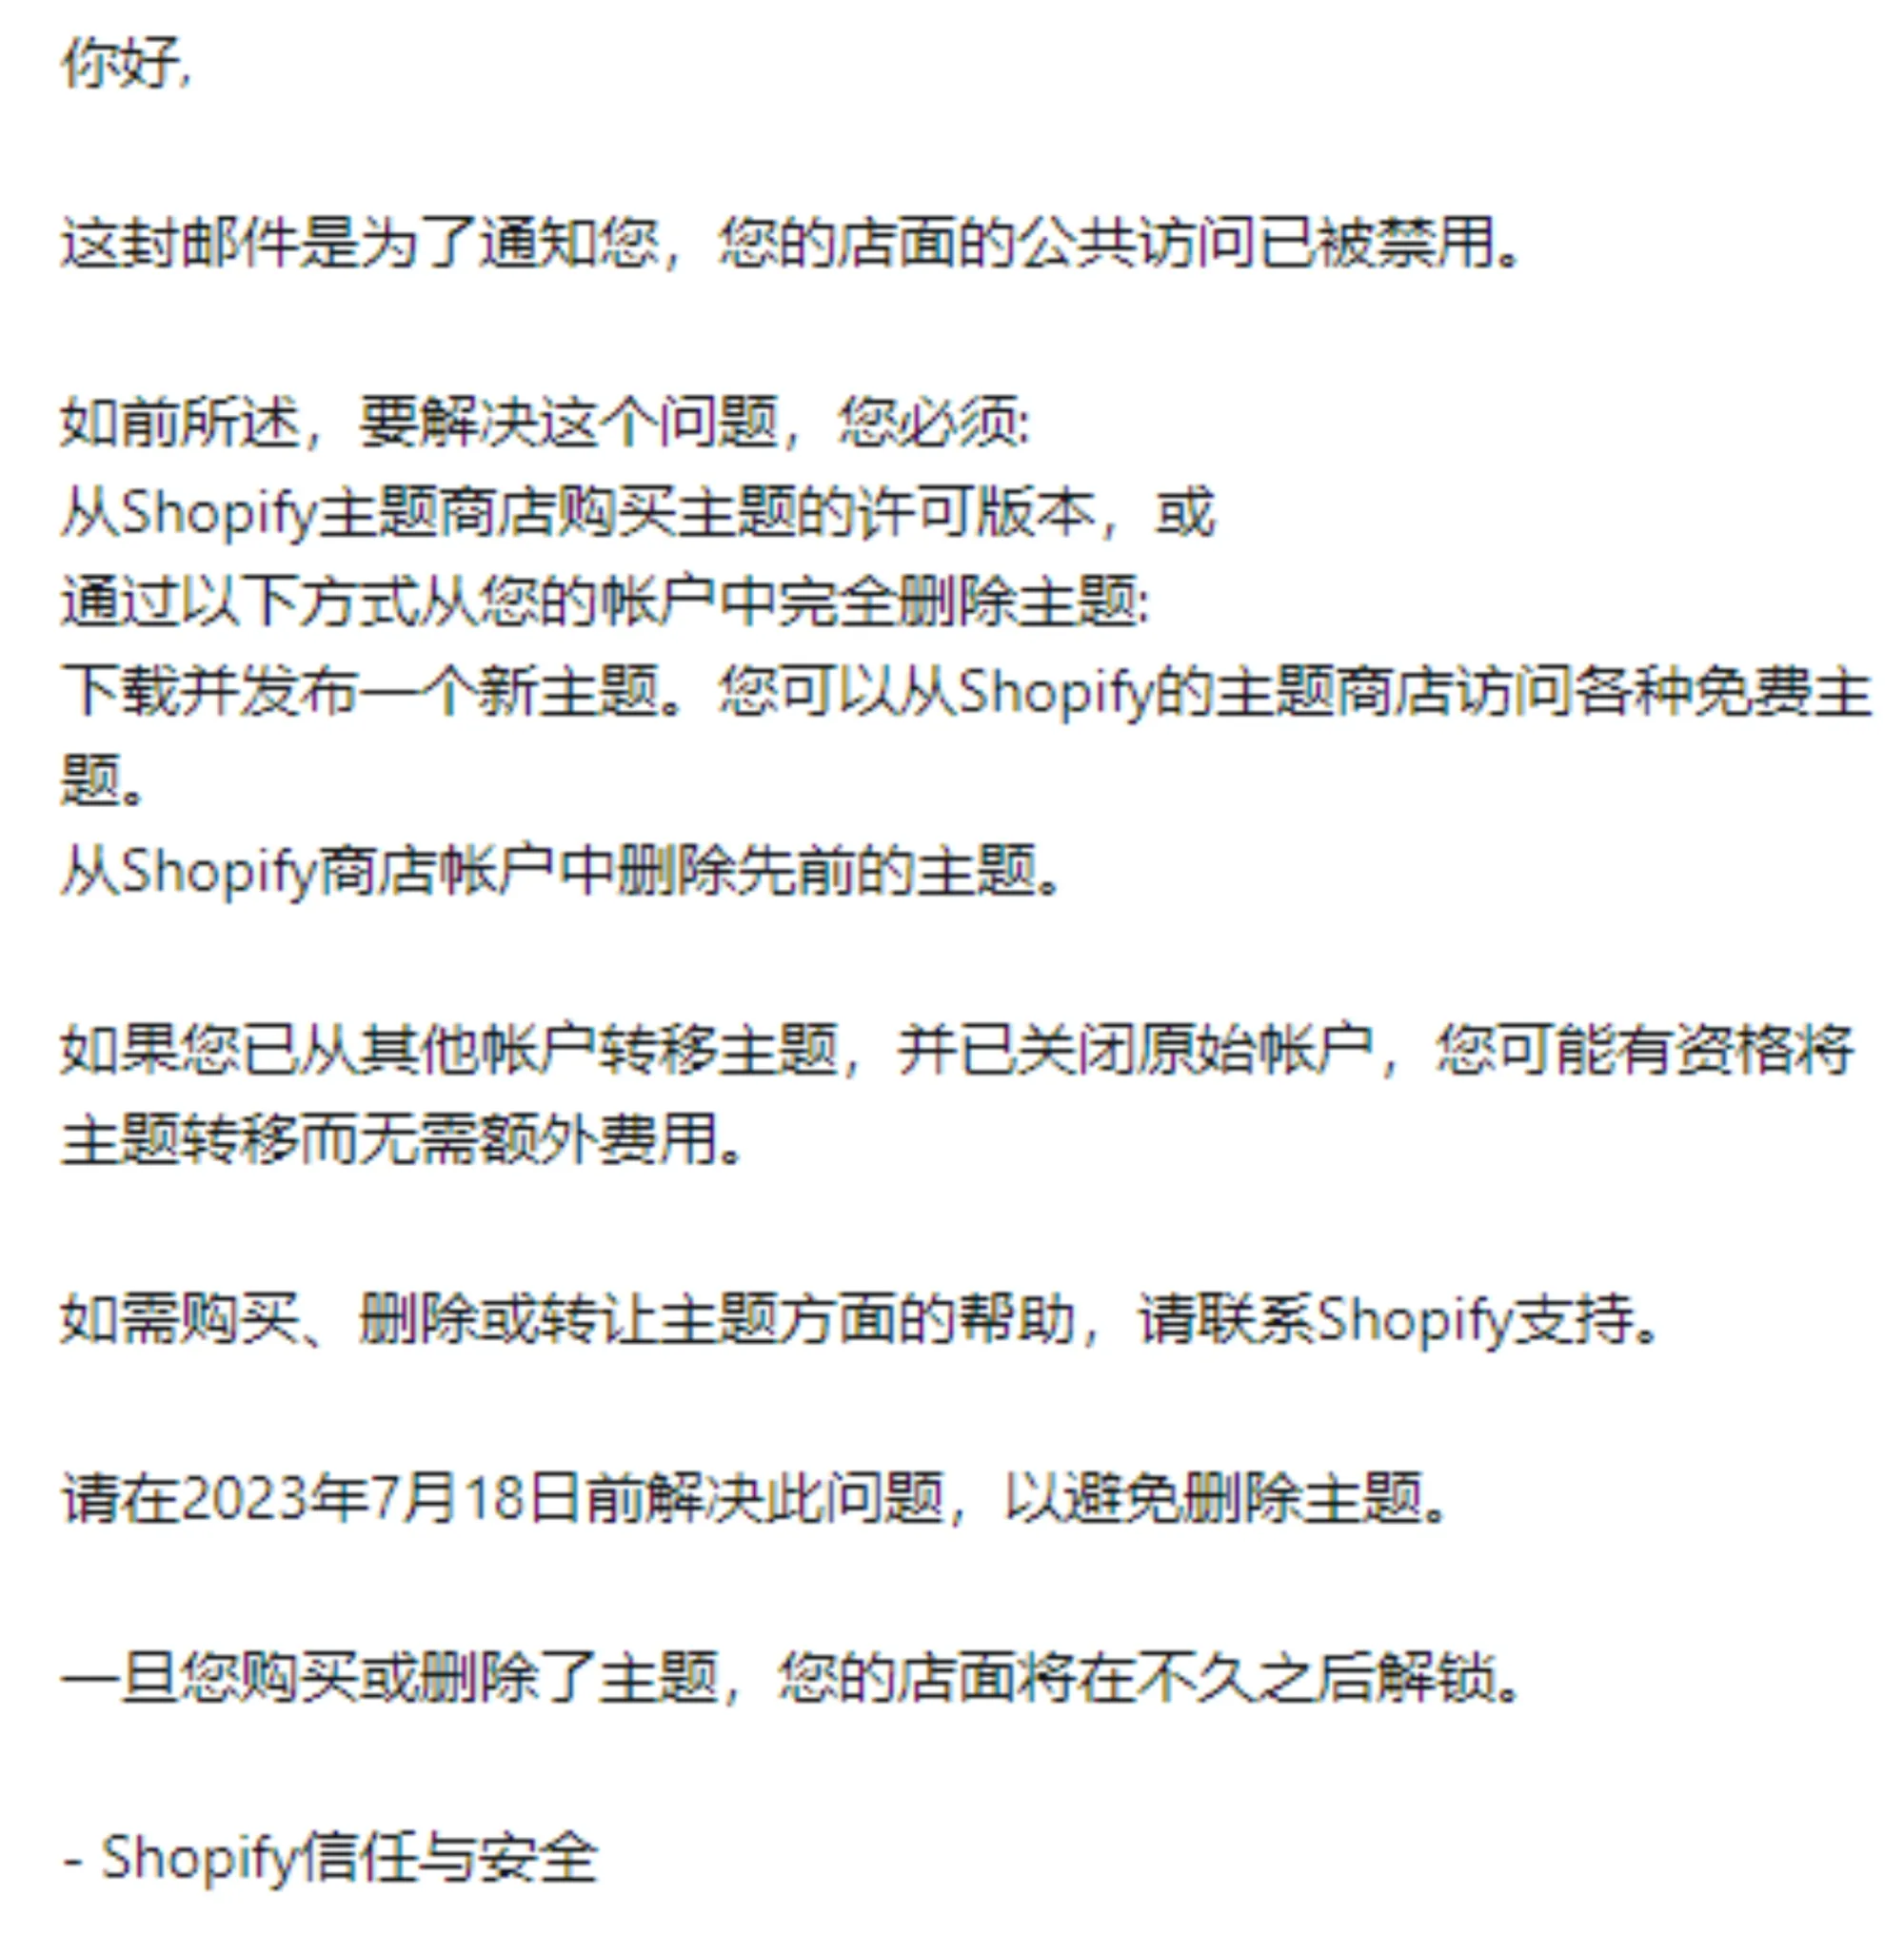 Shopify警告邮件翻译为中文